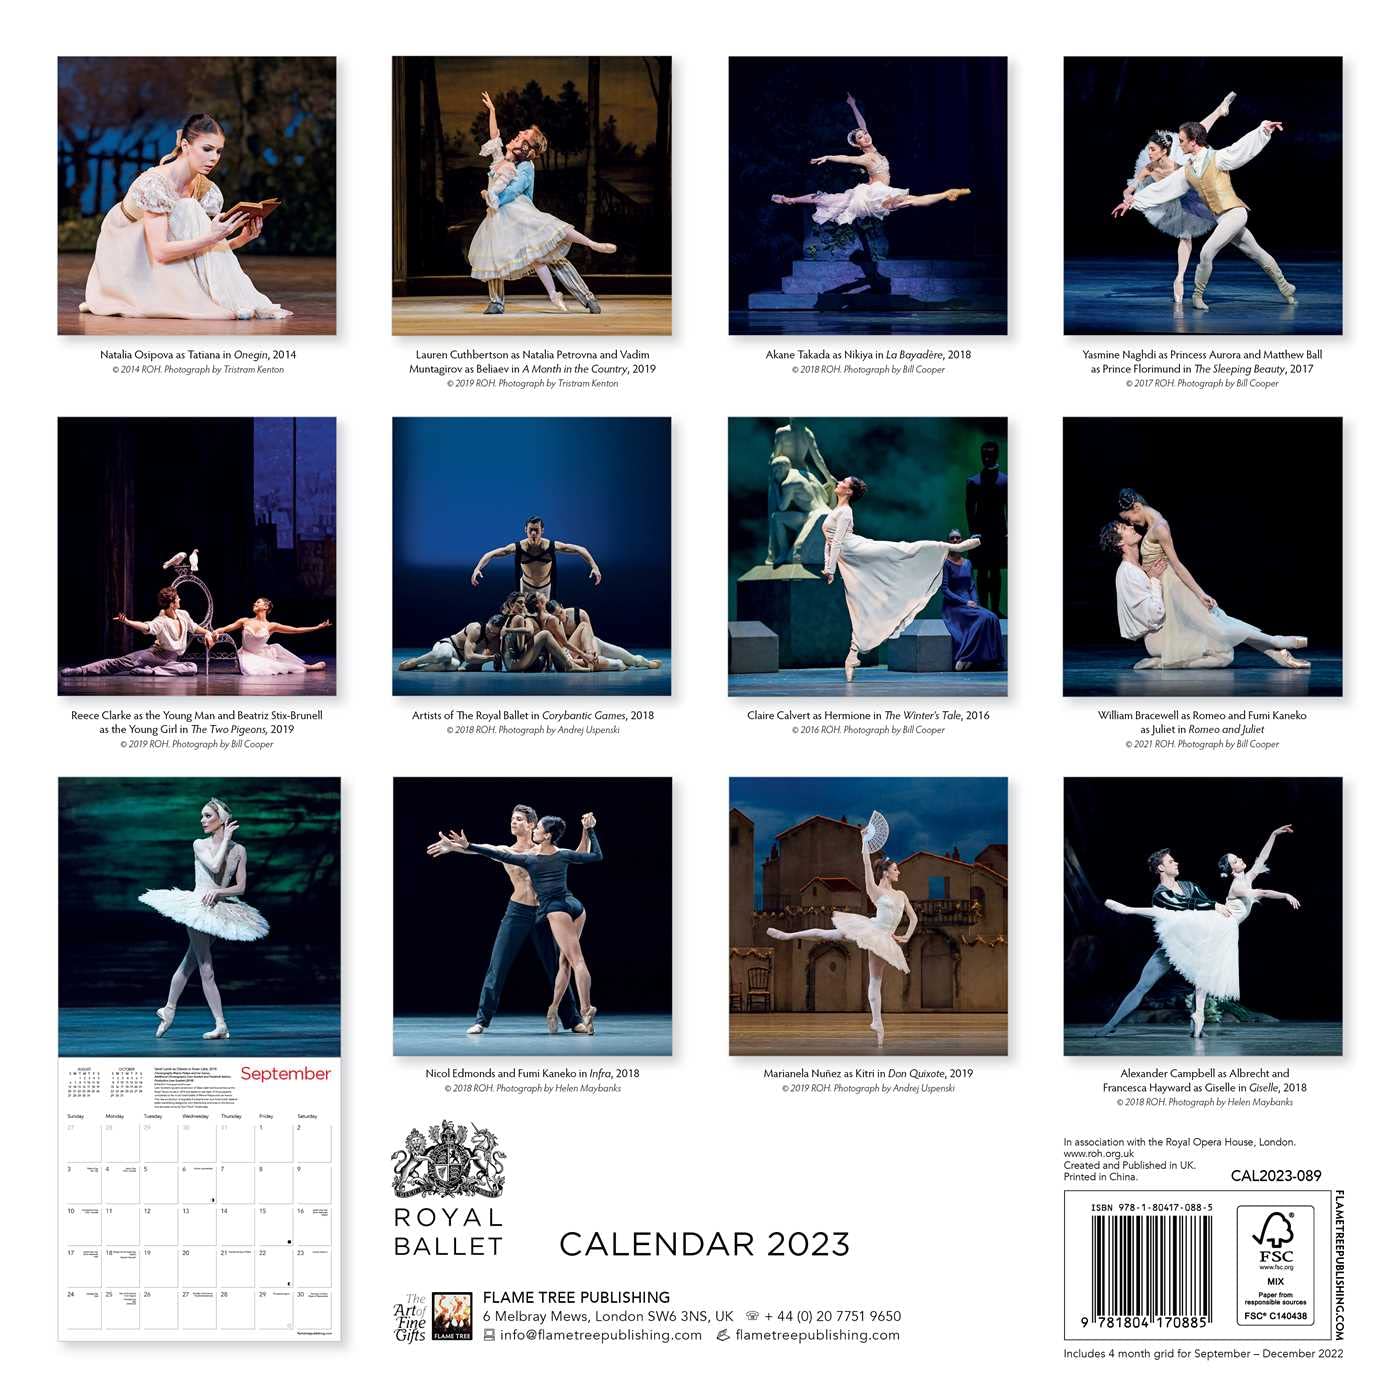 Calendar 2023 The Royal Ballet Flame Tree Publishing